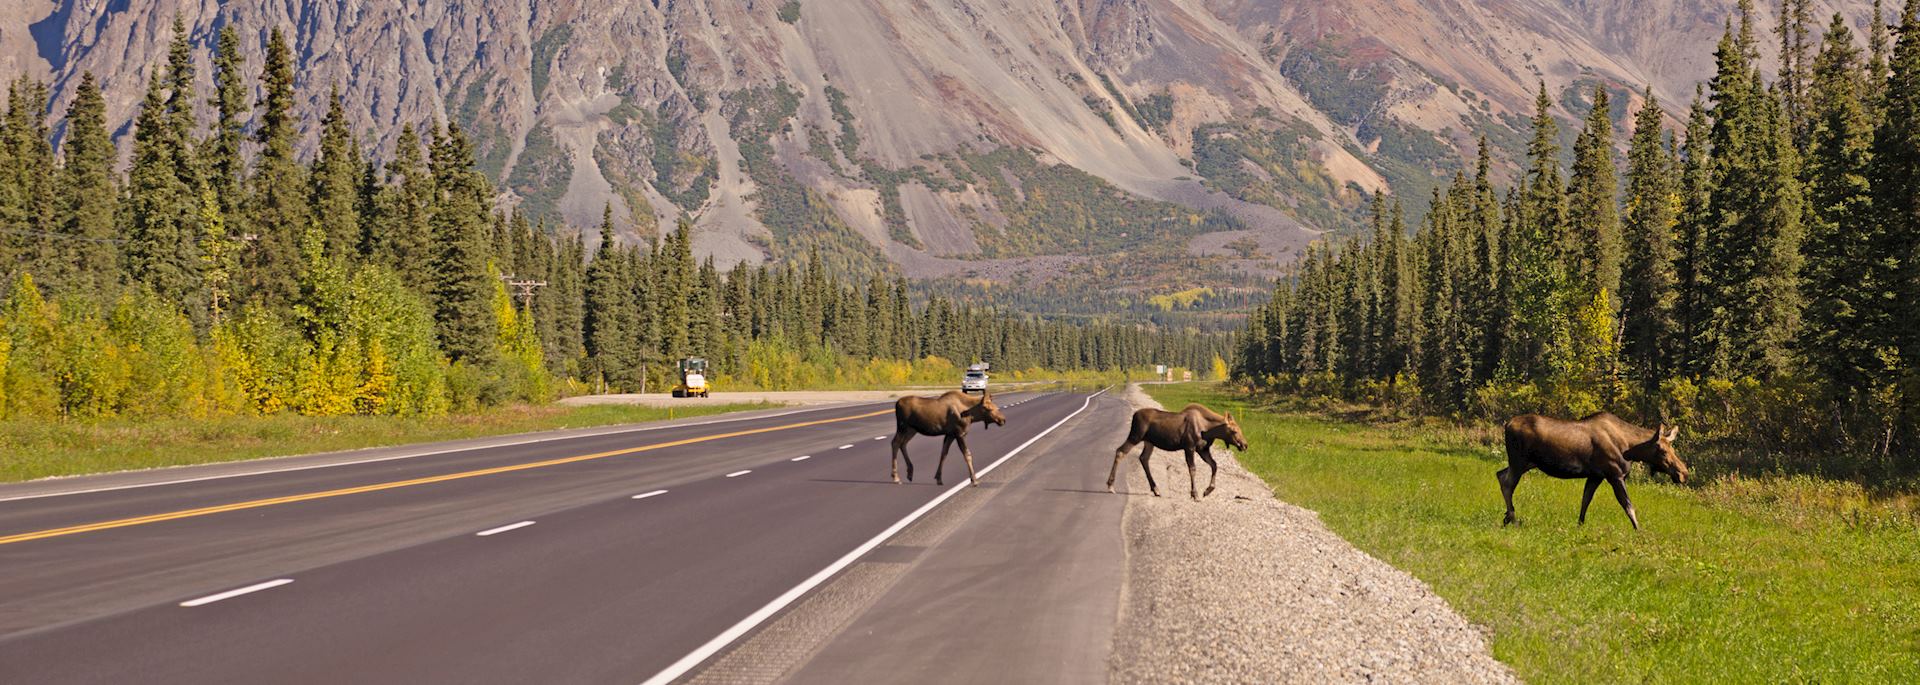 Moose in Denali National Park